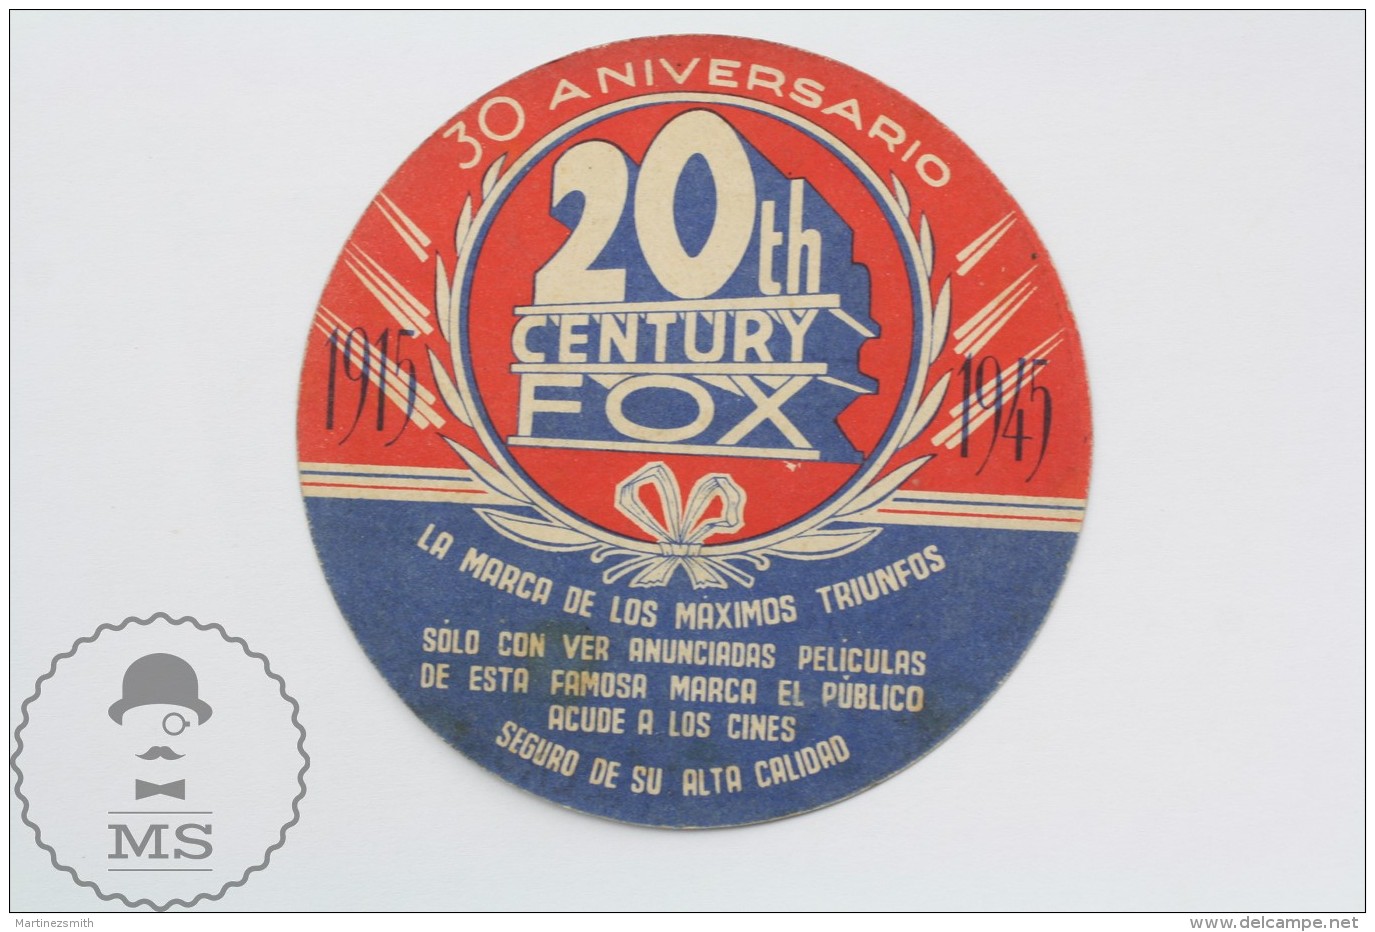 Original Old Cinema/ Movie Advertising Image - 20Th Century Fox 30th Anniversary - 1915 - 1945 - Actor: Dana Andrews - Publicidad